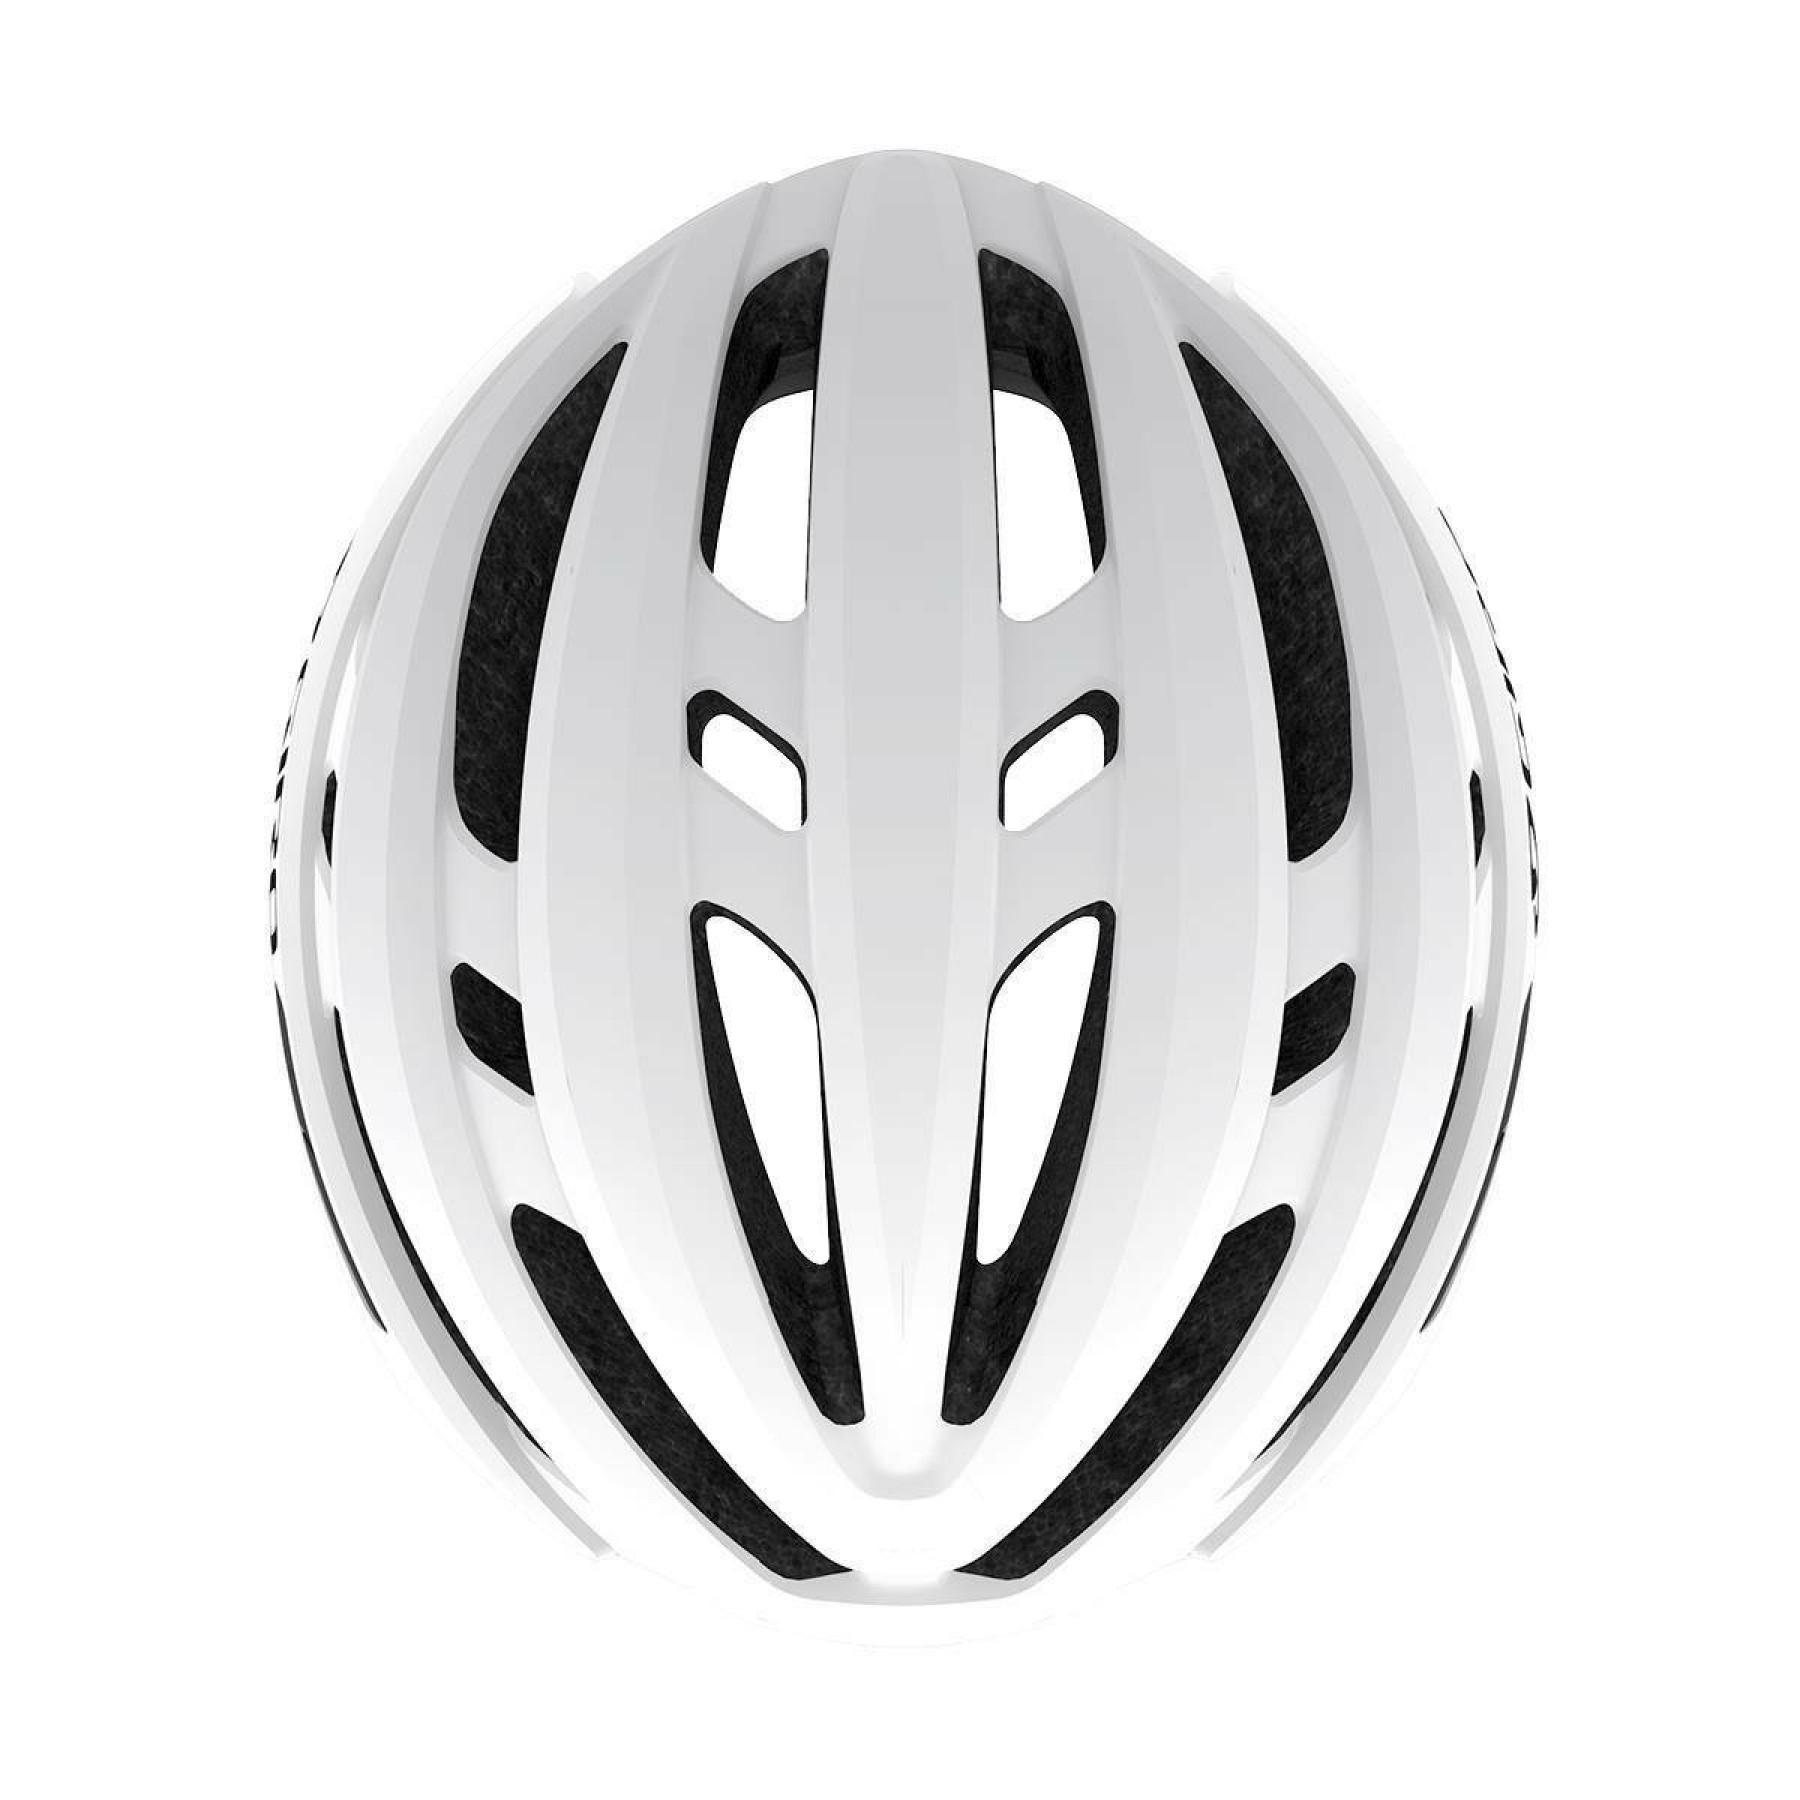 Bike helmet Giro Agilis